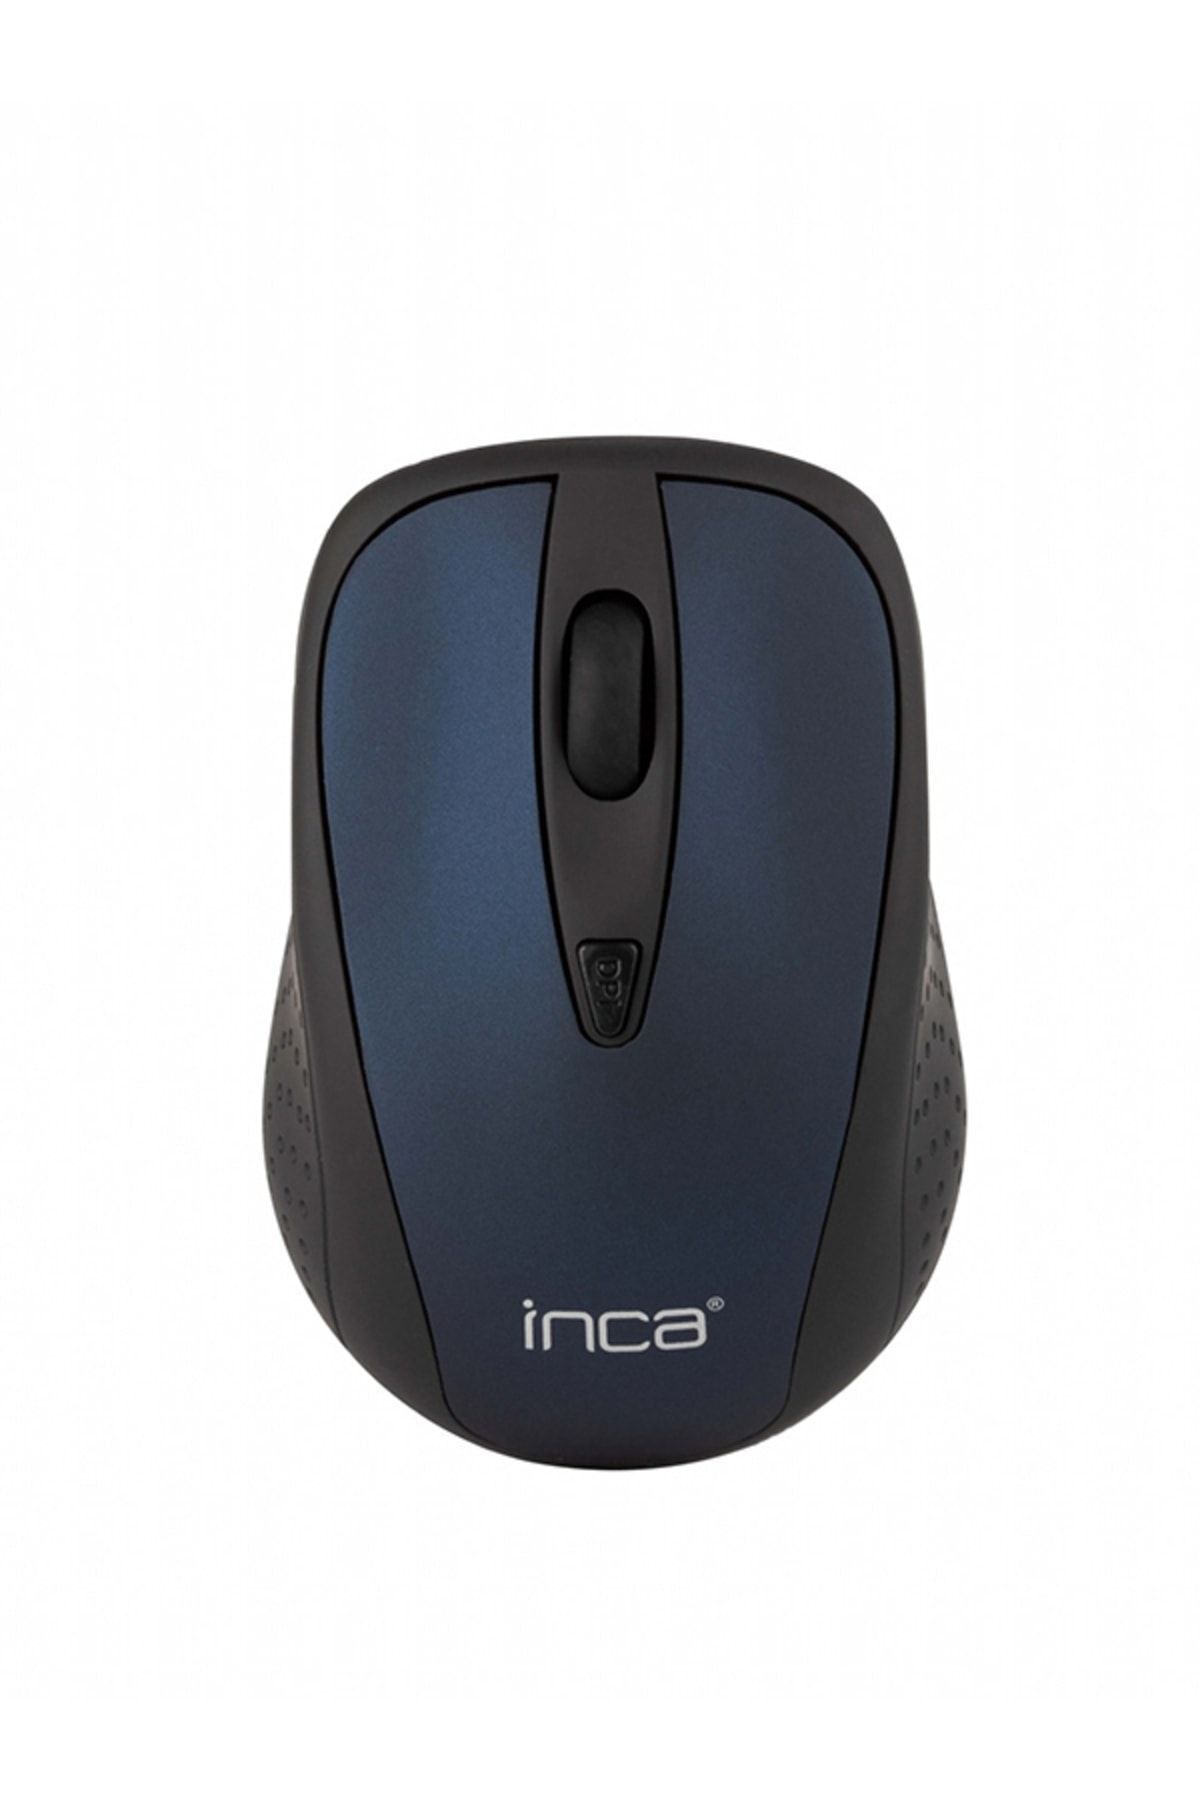 Inca İwm-213Tl 2.4Ghz Wıreless Nano Receiver Lacivert Kablosuz Mouse